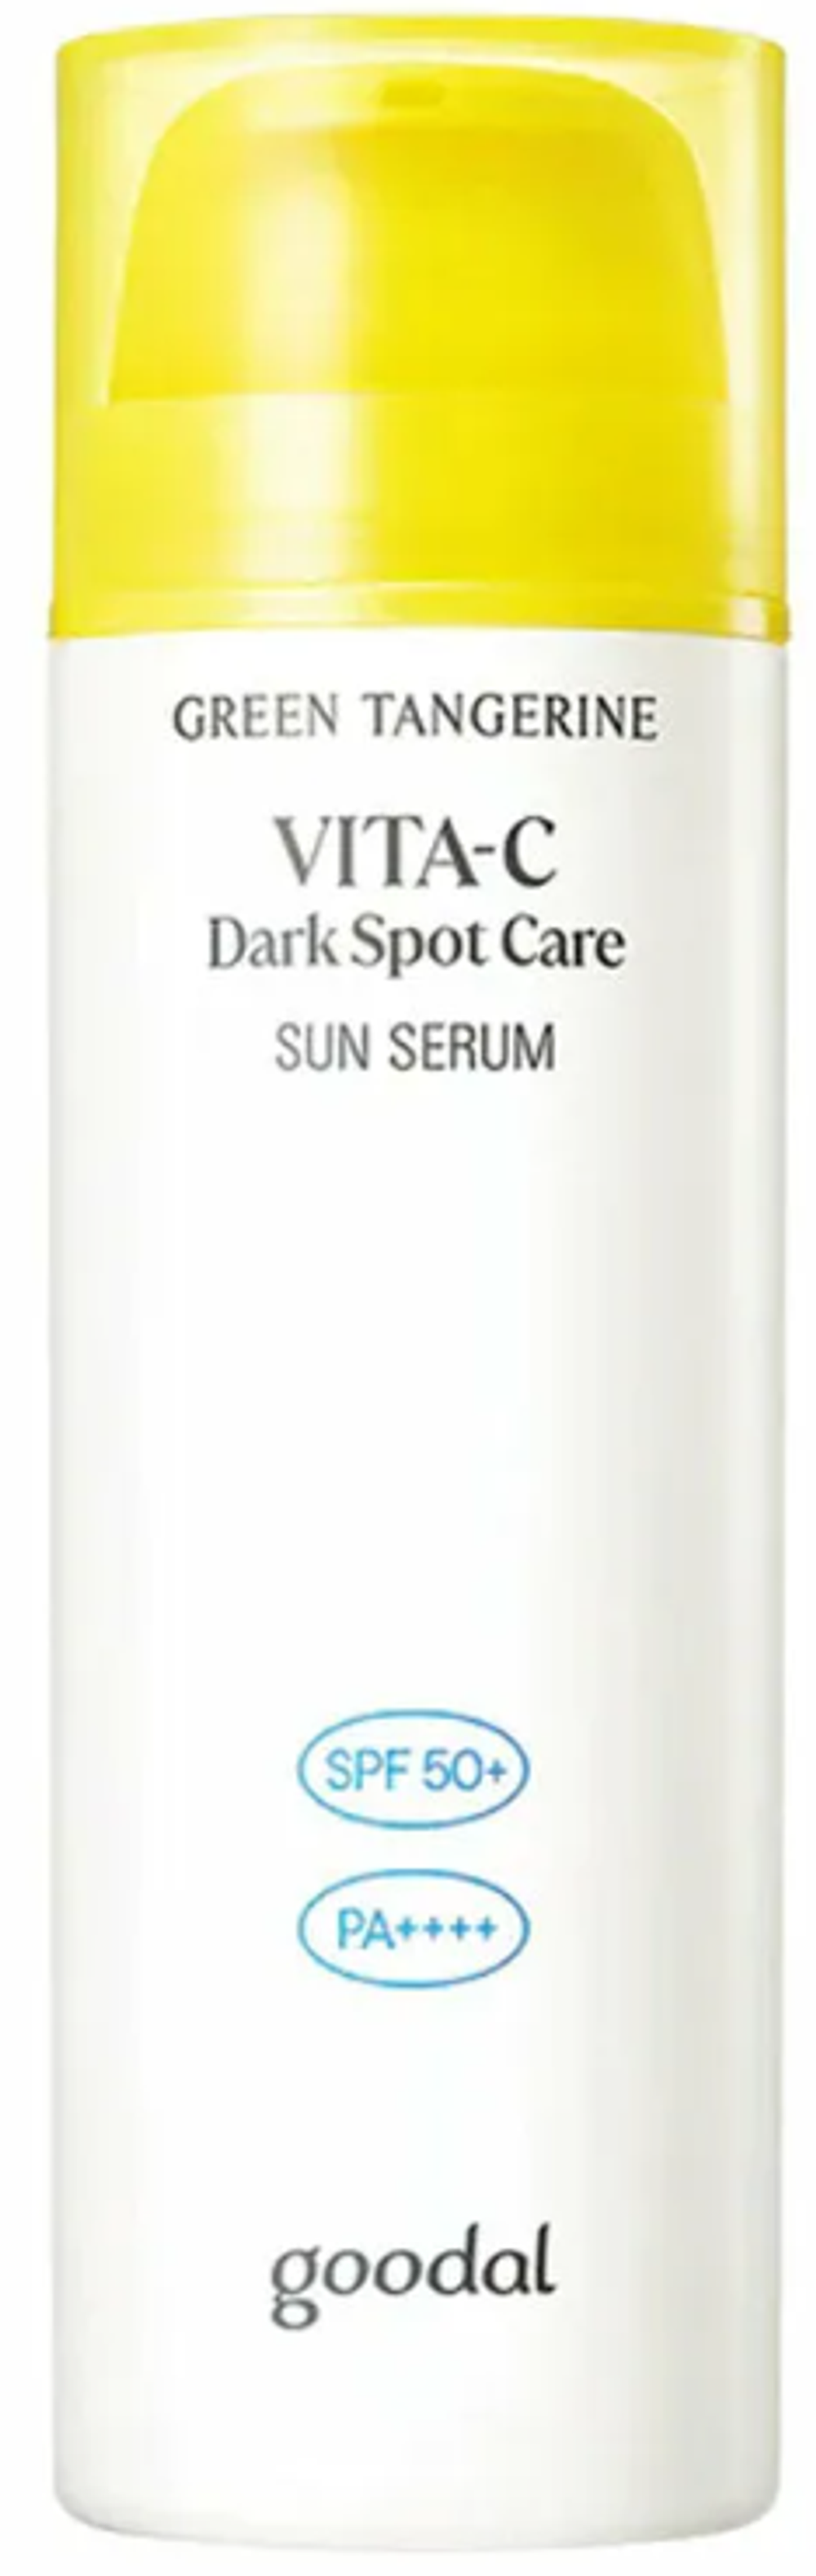 Goodal Green Tangerine Vita C Dark Spot Care Sun Serum сыворотка для лица SPF50+ PA++++ 50мл